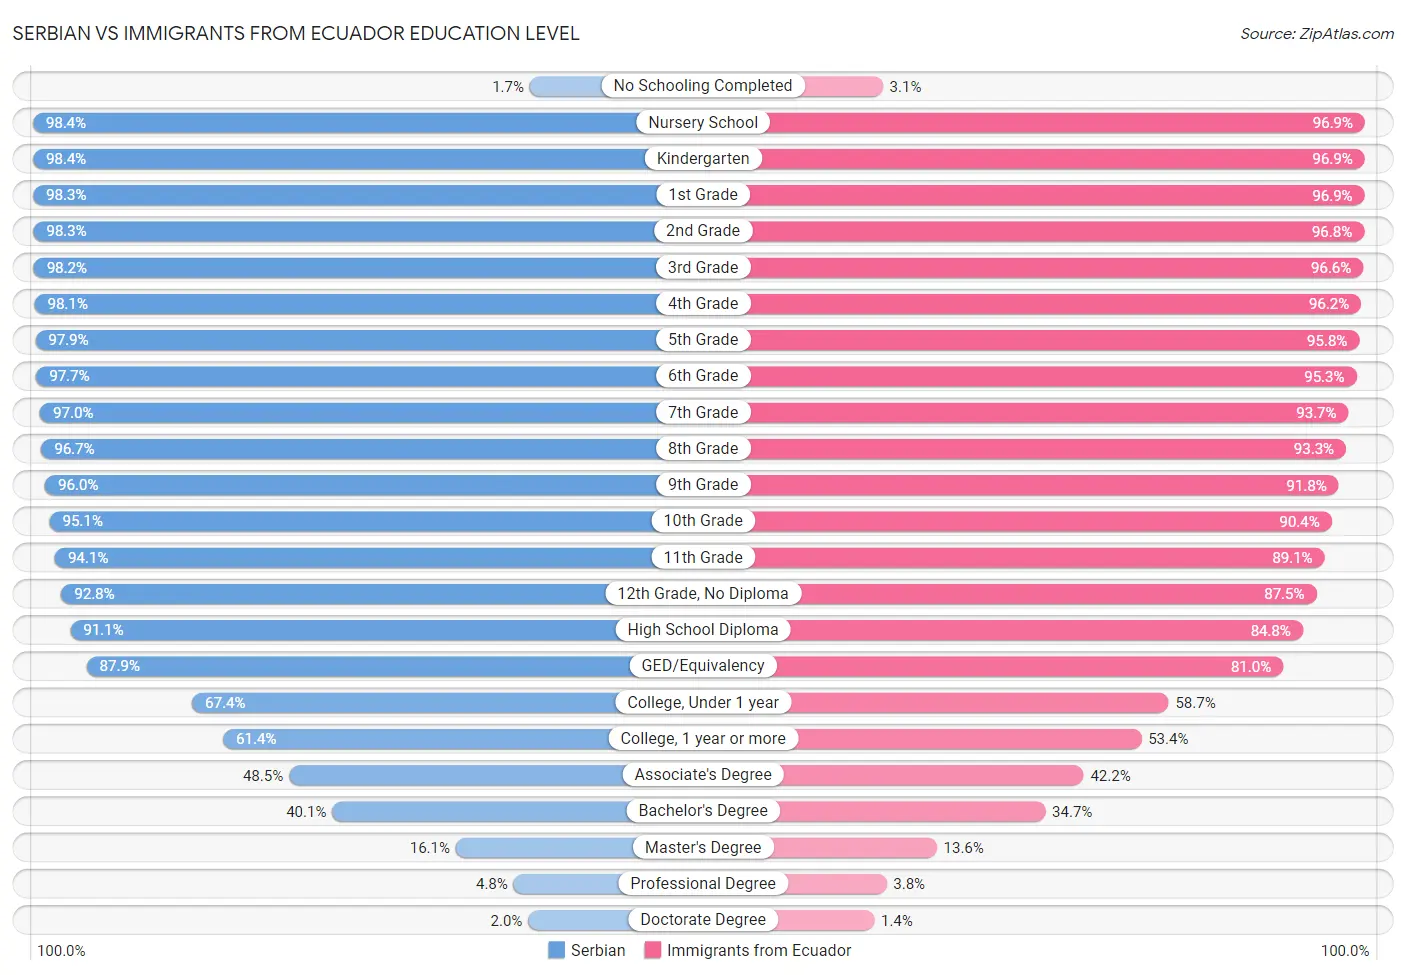 Serbian vs Immigrants from Ecuador Education Level